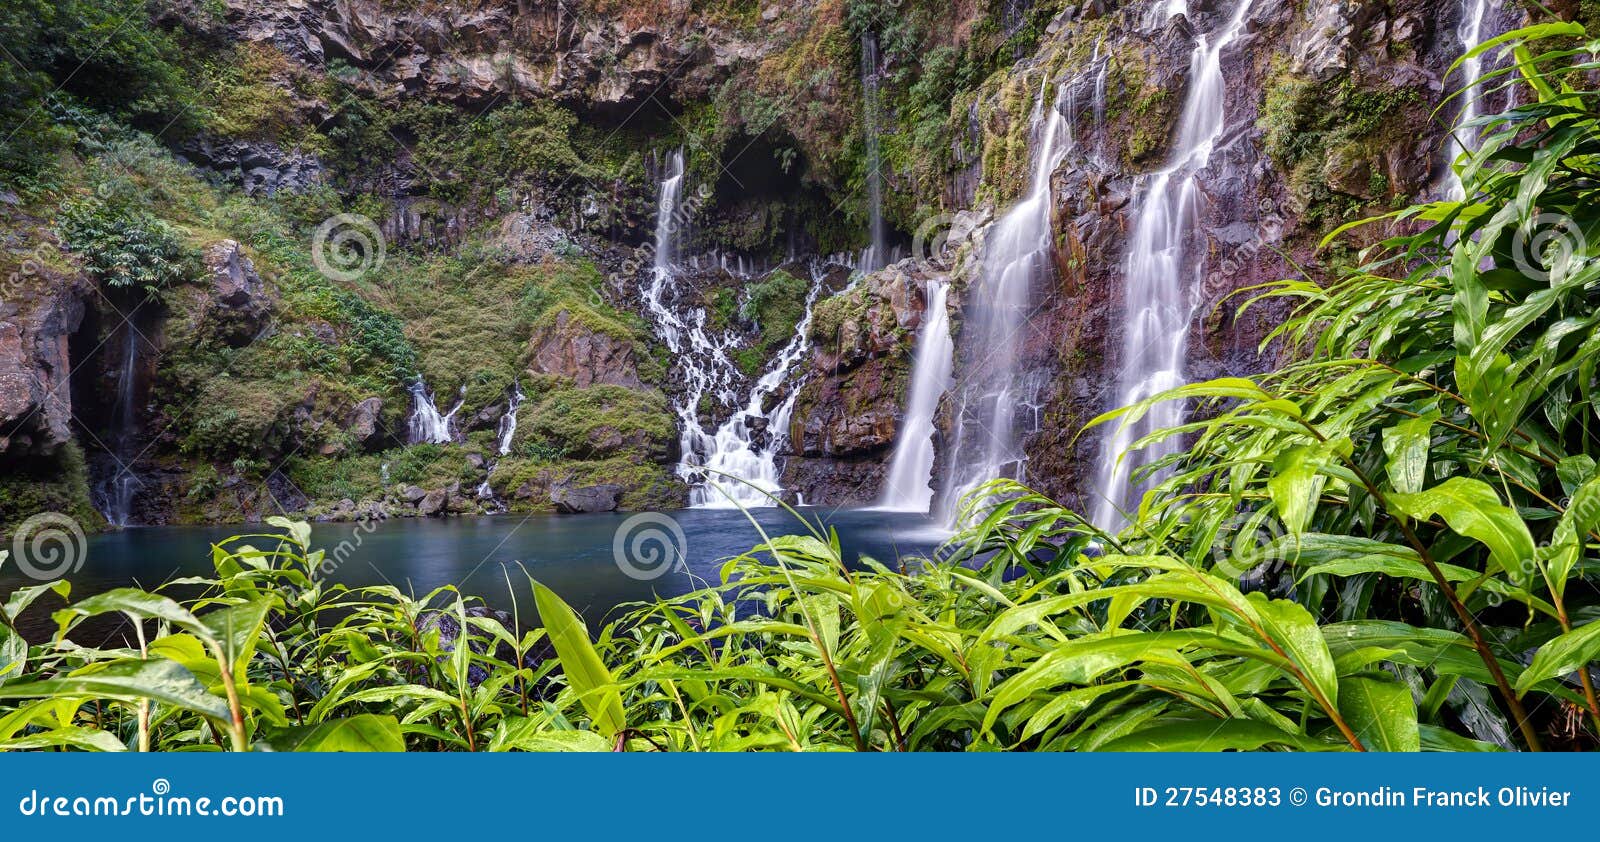 waterfall on langevin river